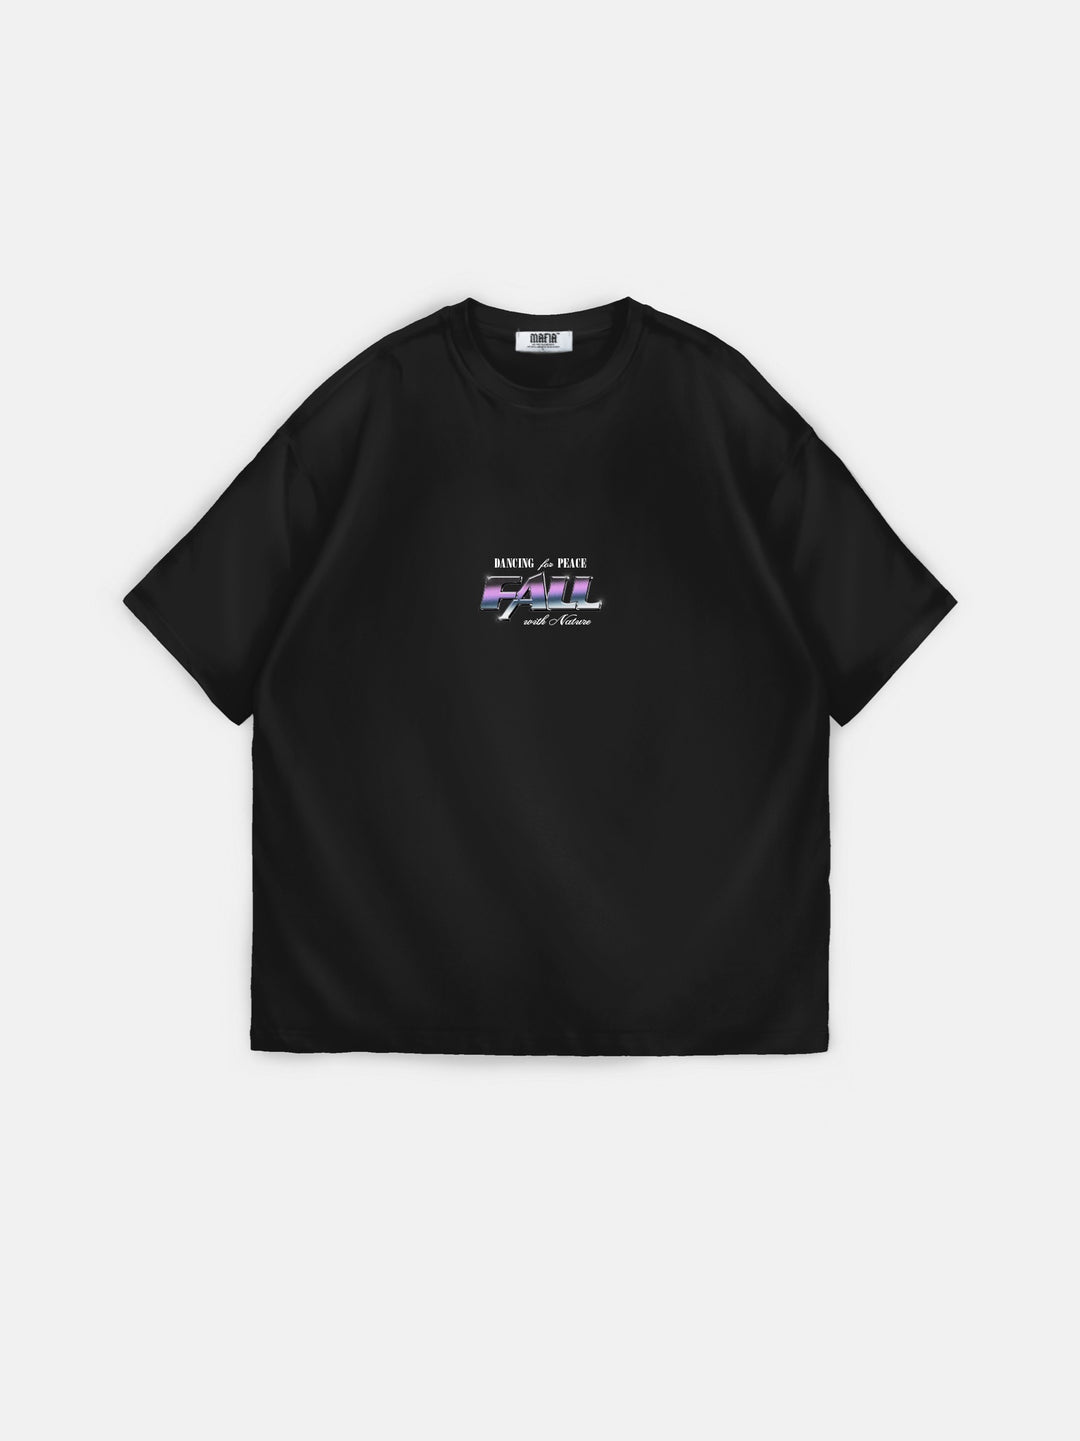 Oversize 'Fall' T-shirt - Black